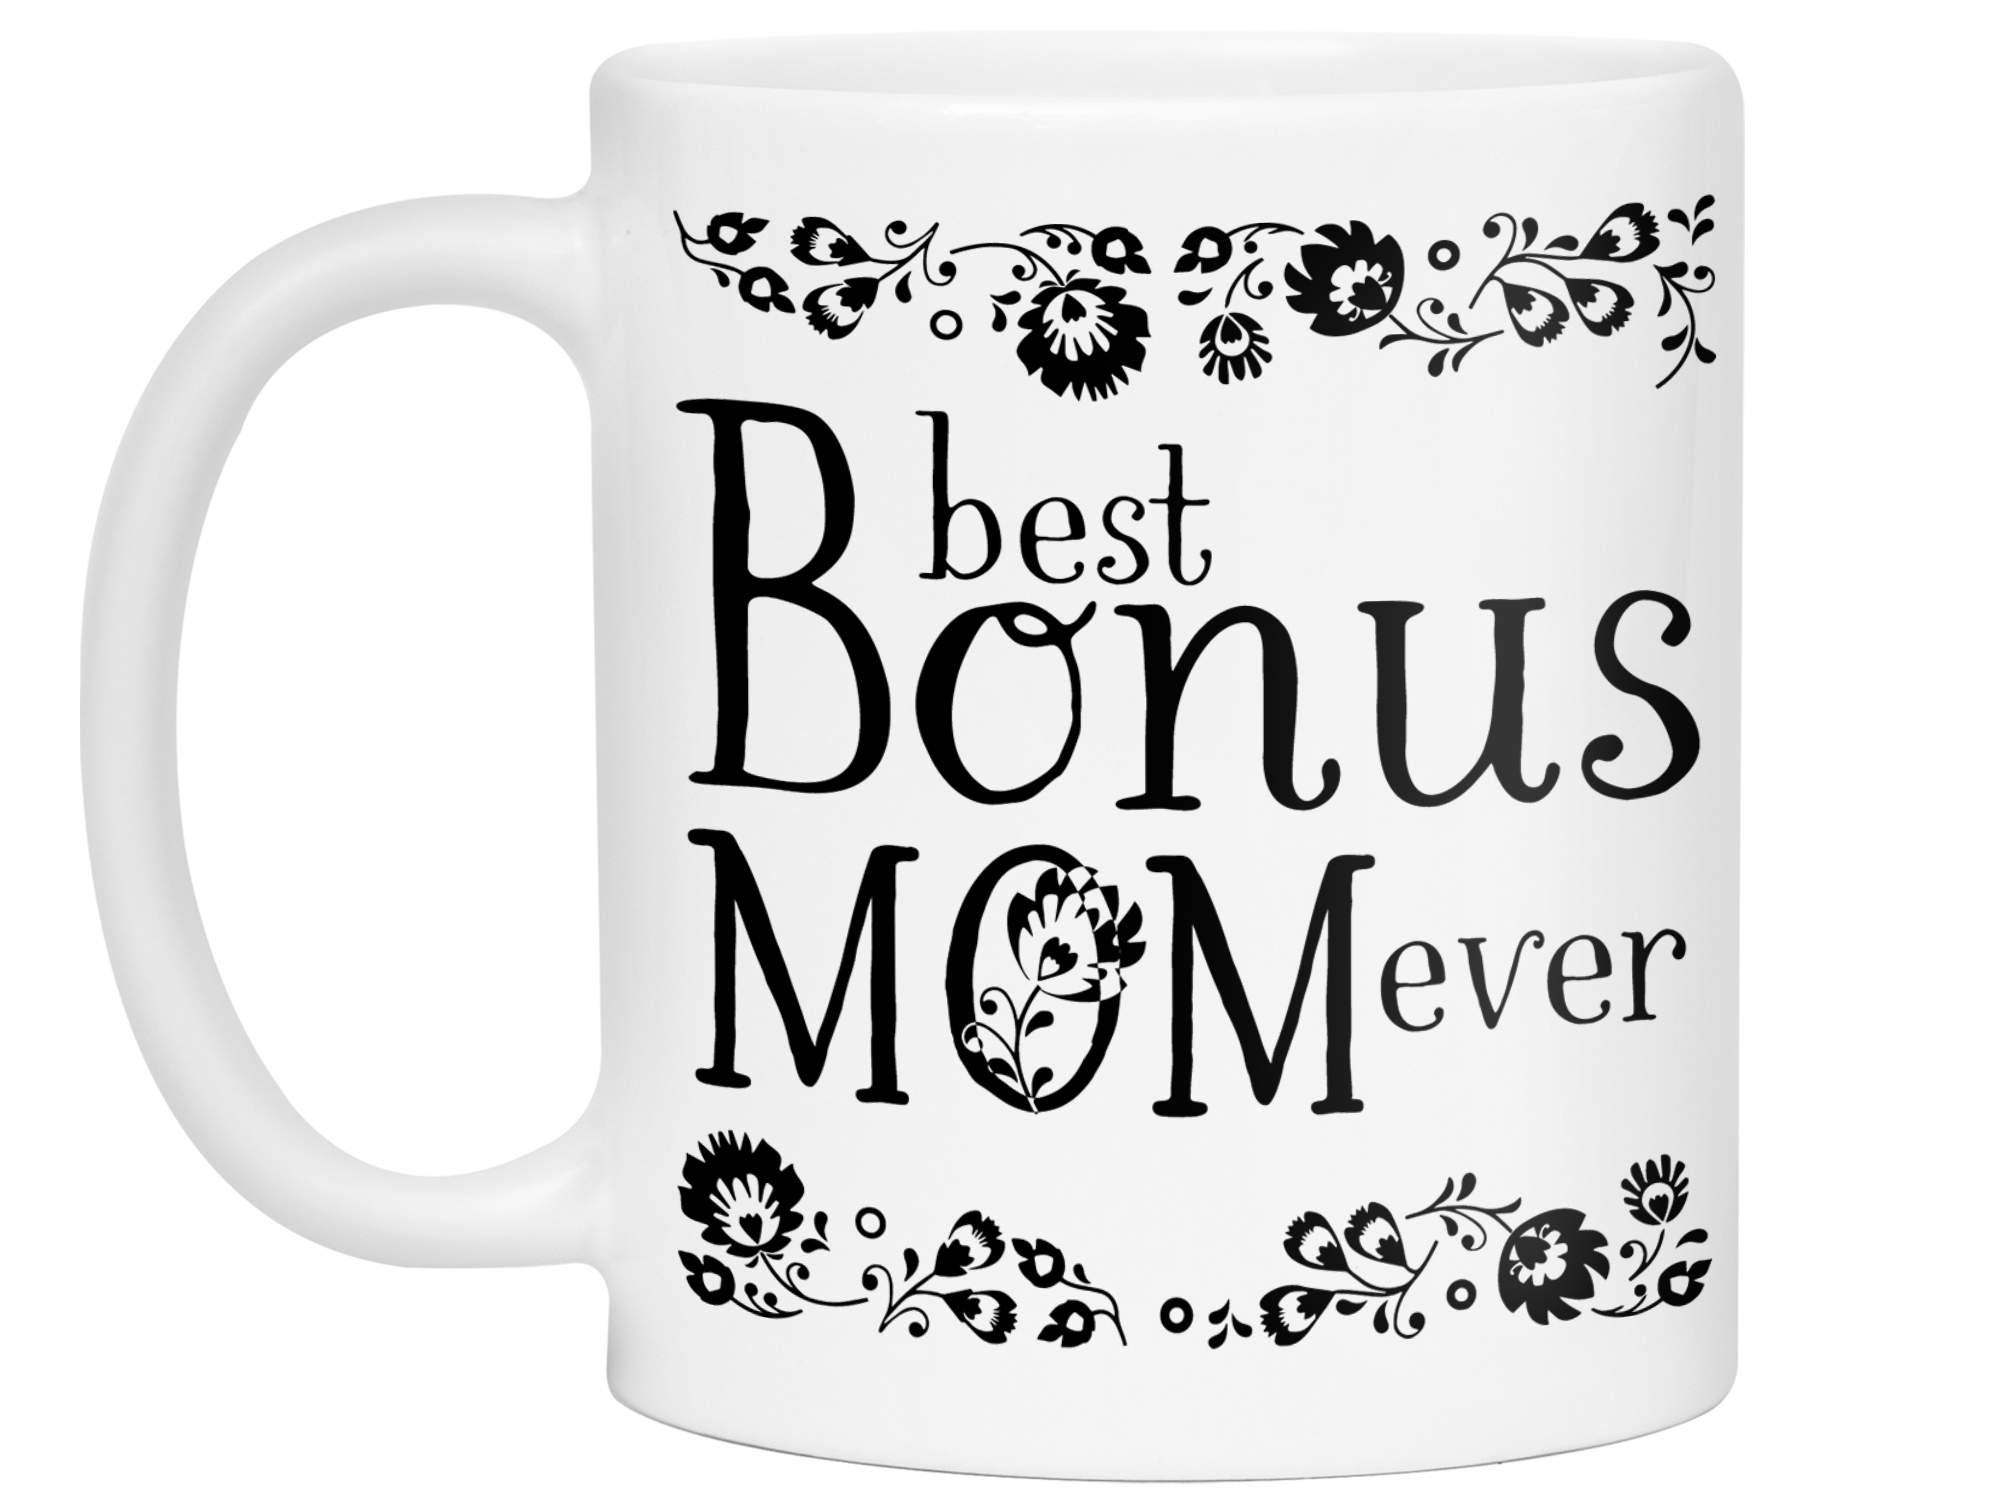 Personalized Bonus Mom Mug - Best Bonus Mom Ever Coffee Cup